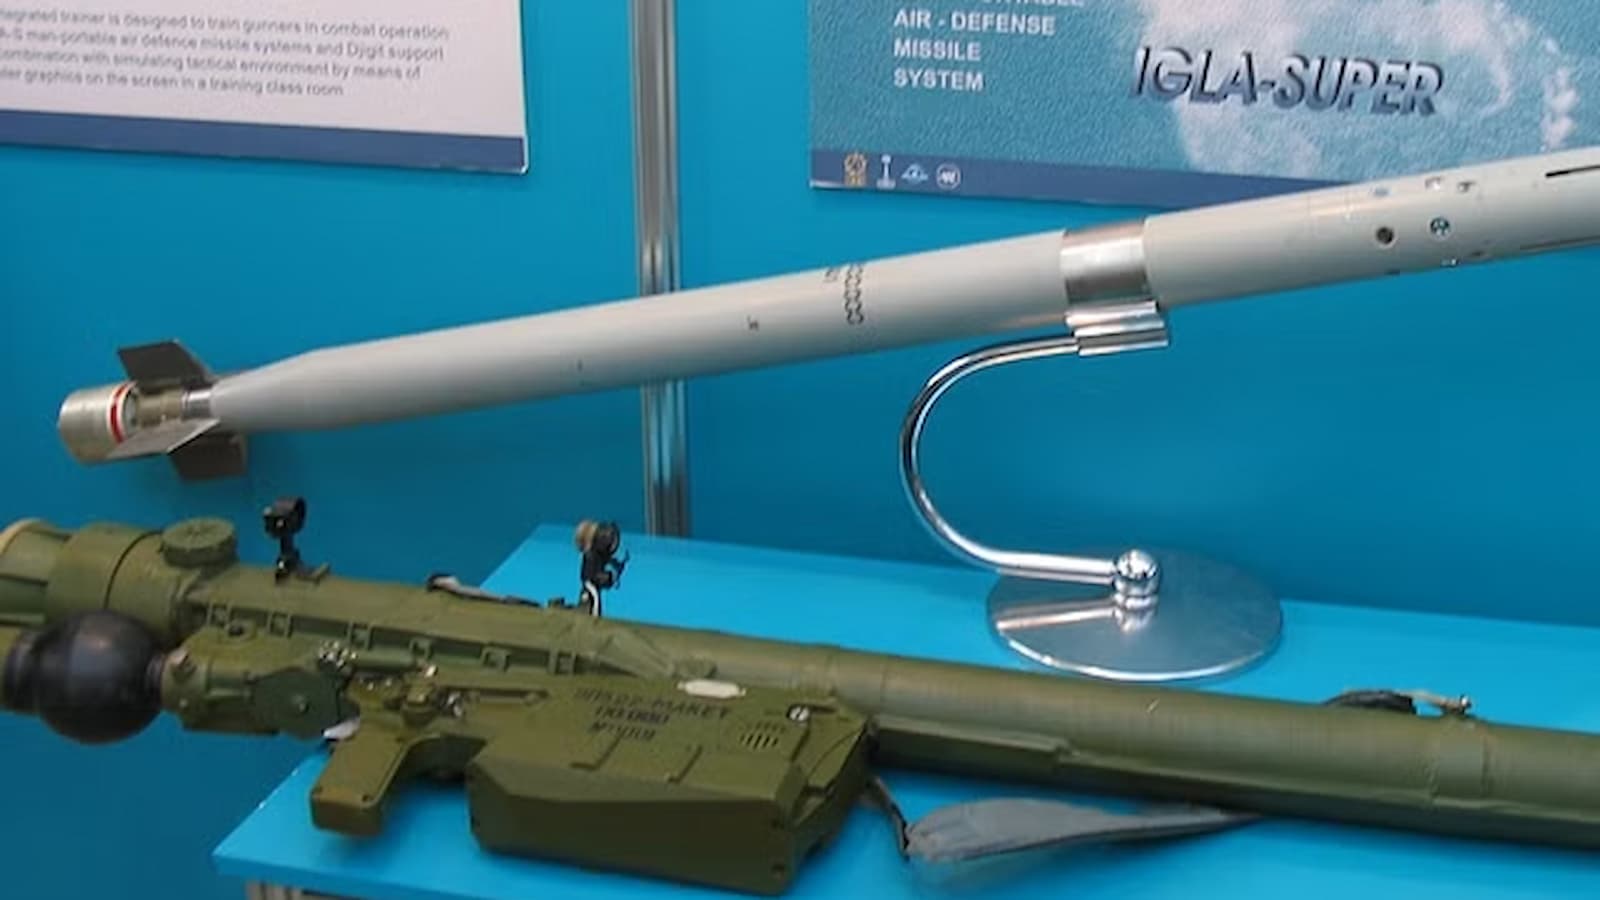 Igla-S Air Defense system, Igla-S missile, Indian air force